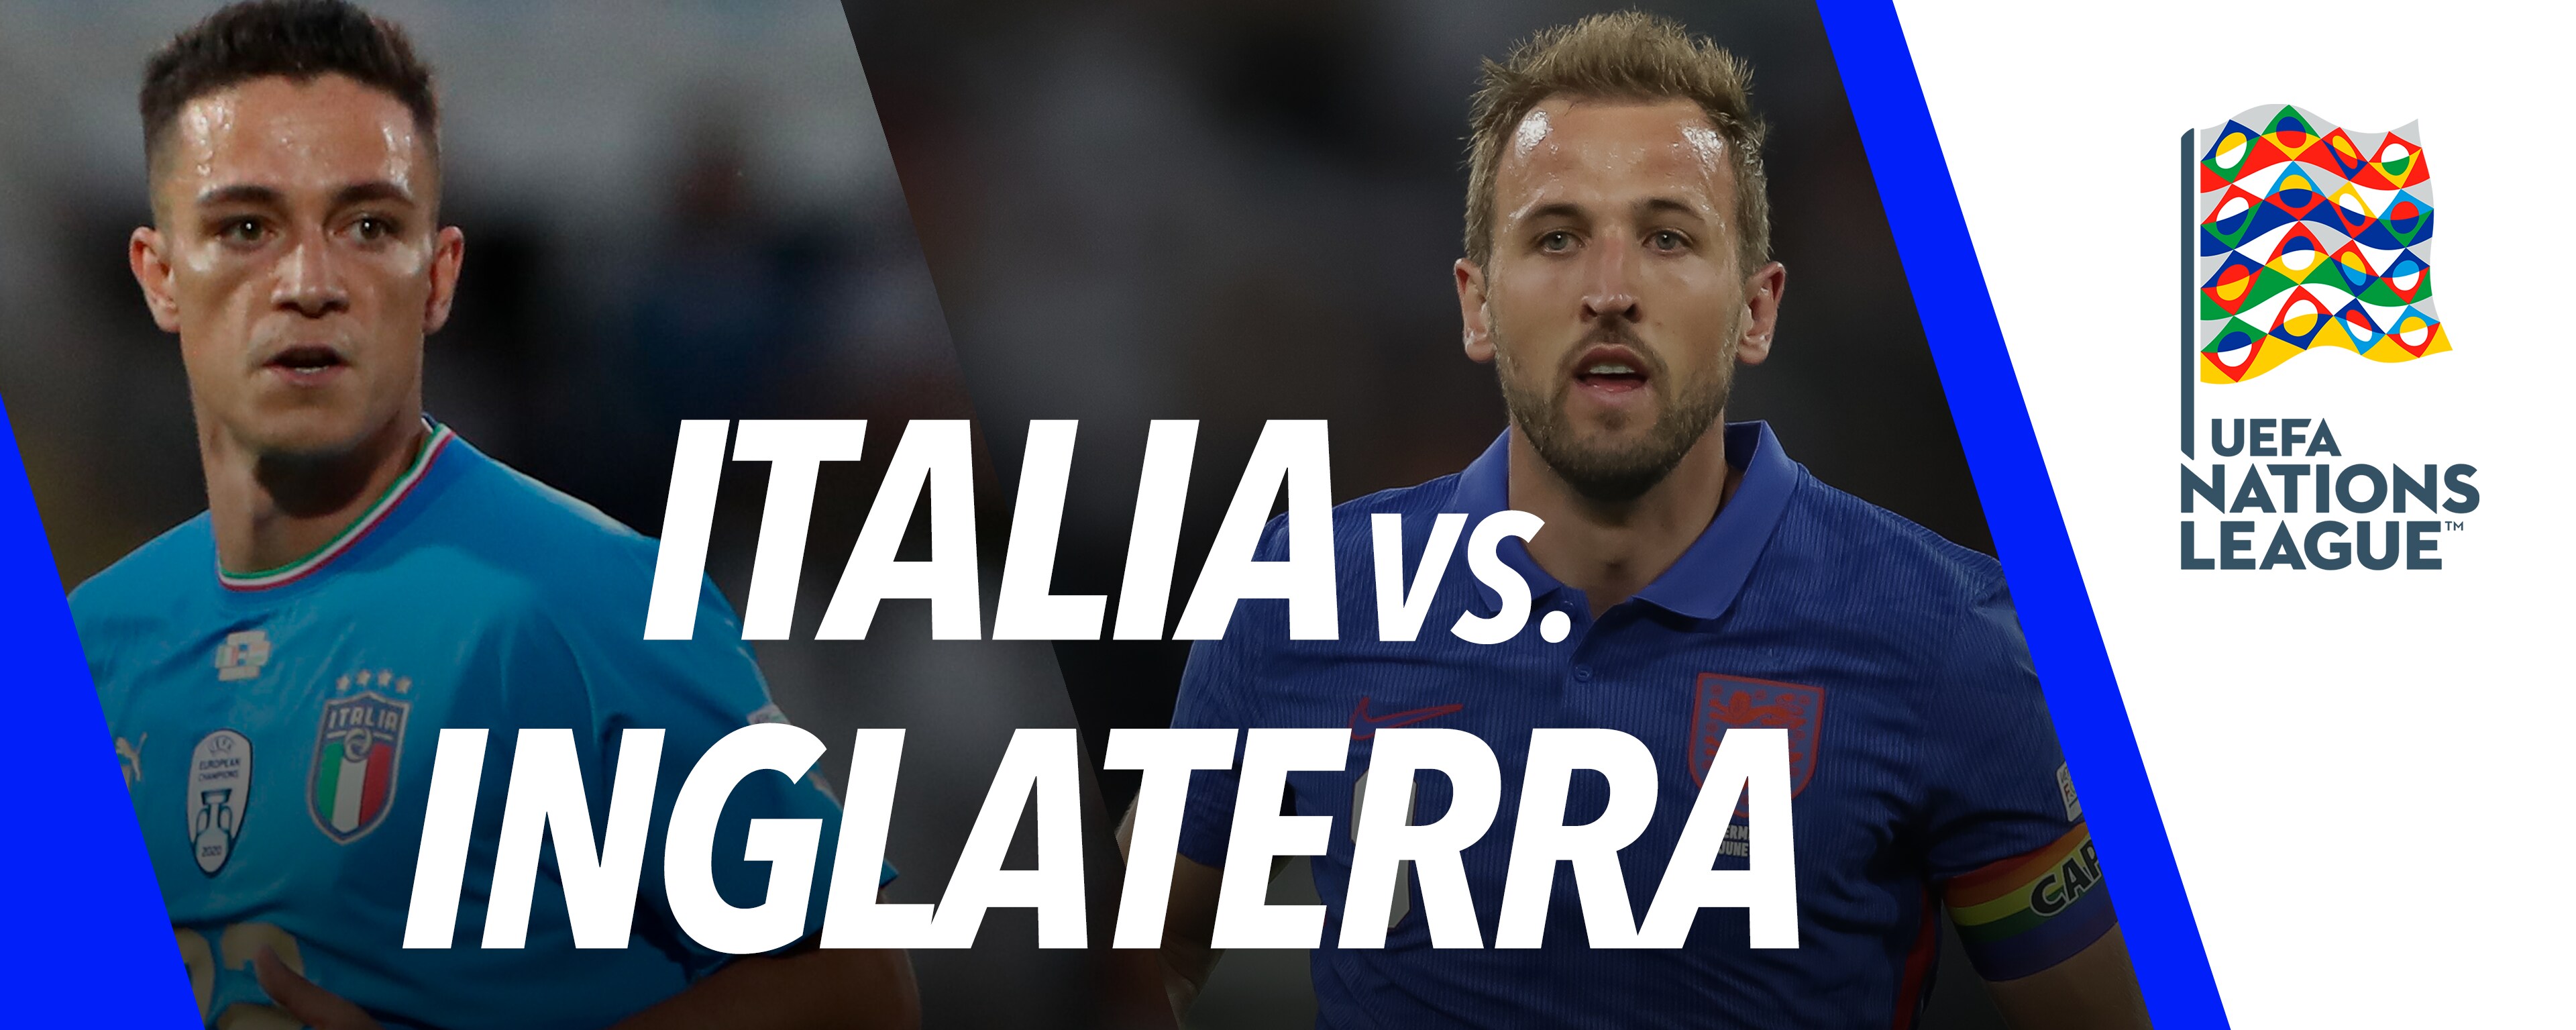 Italia vs Inglaterra en vivo: donde ver online la UEFA Nations League | Star Latinoamérica